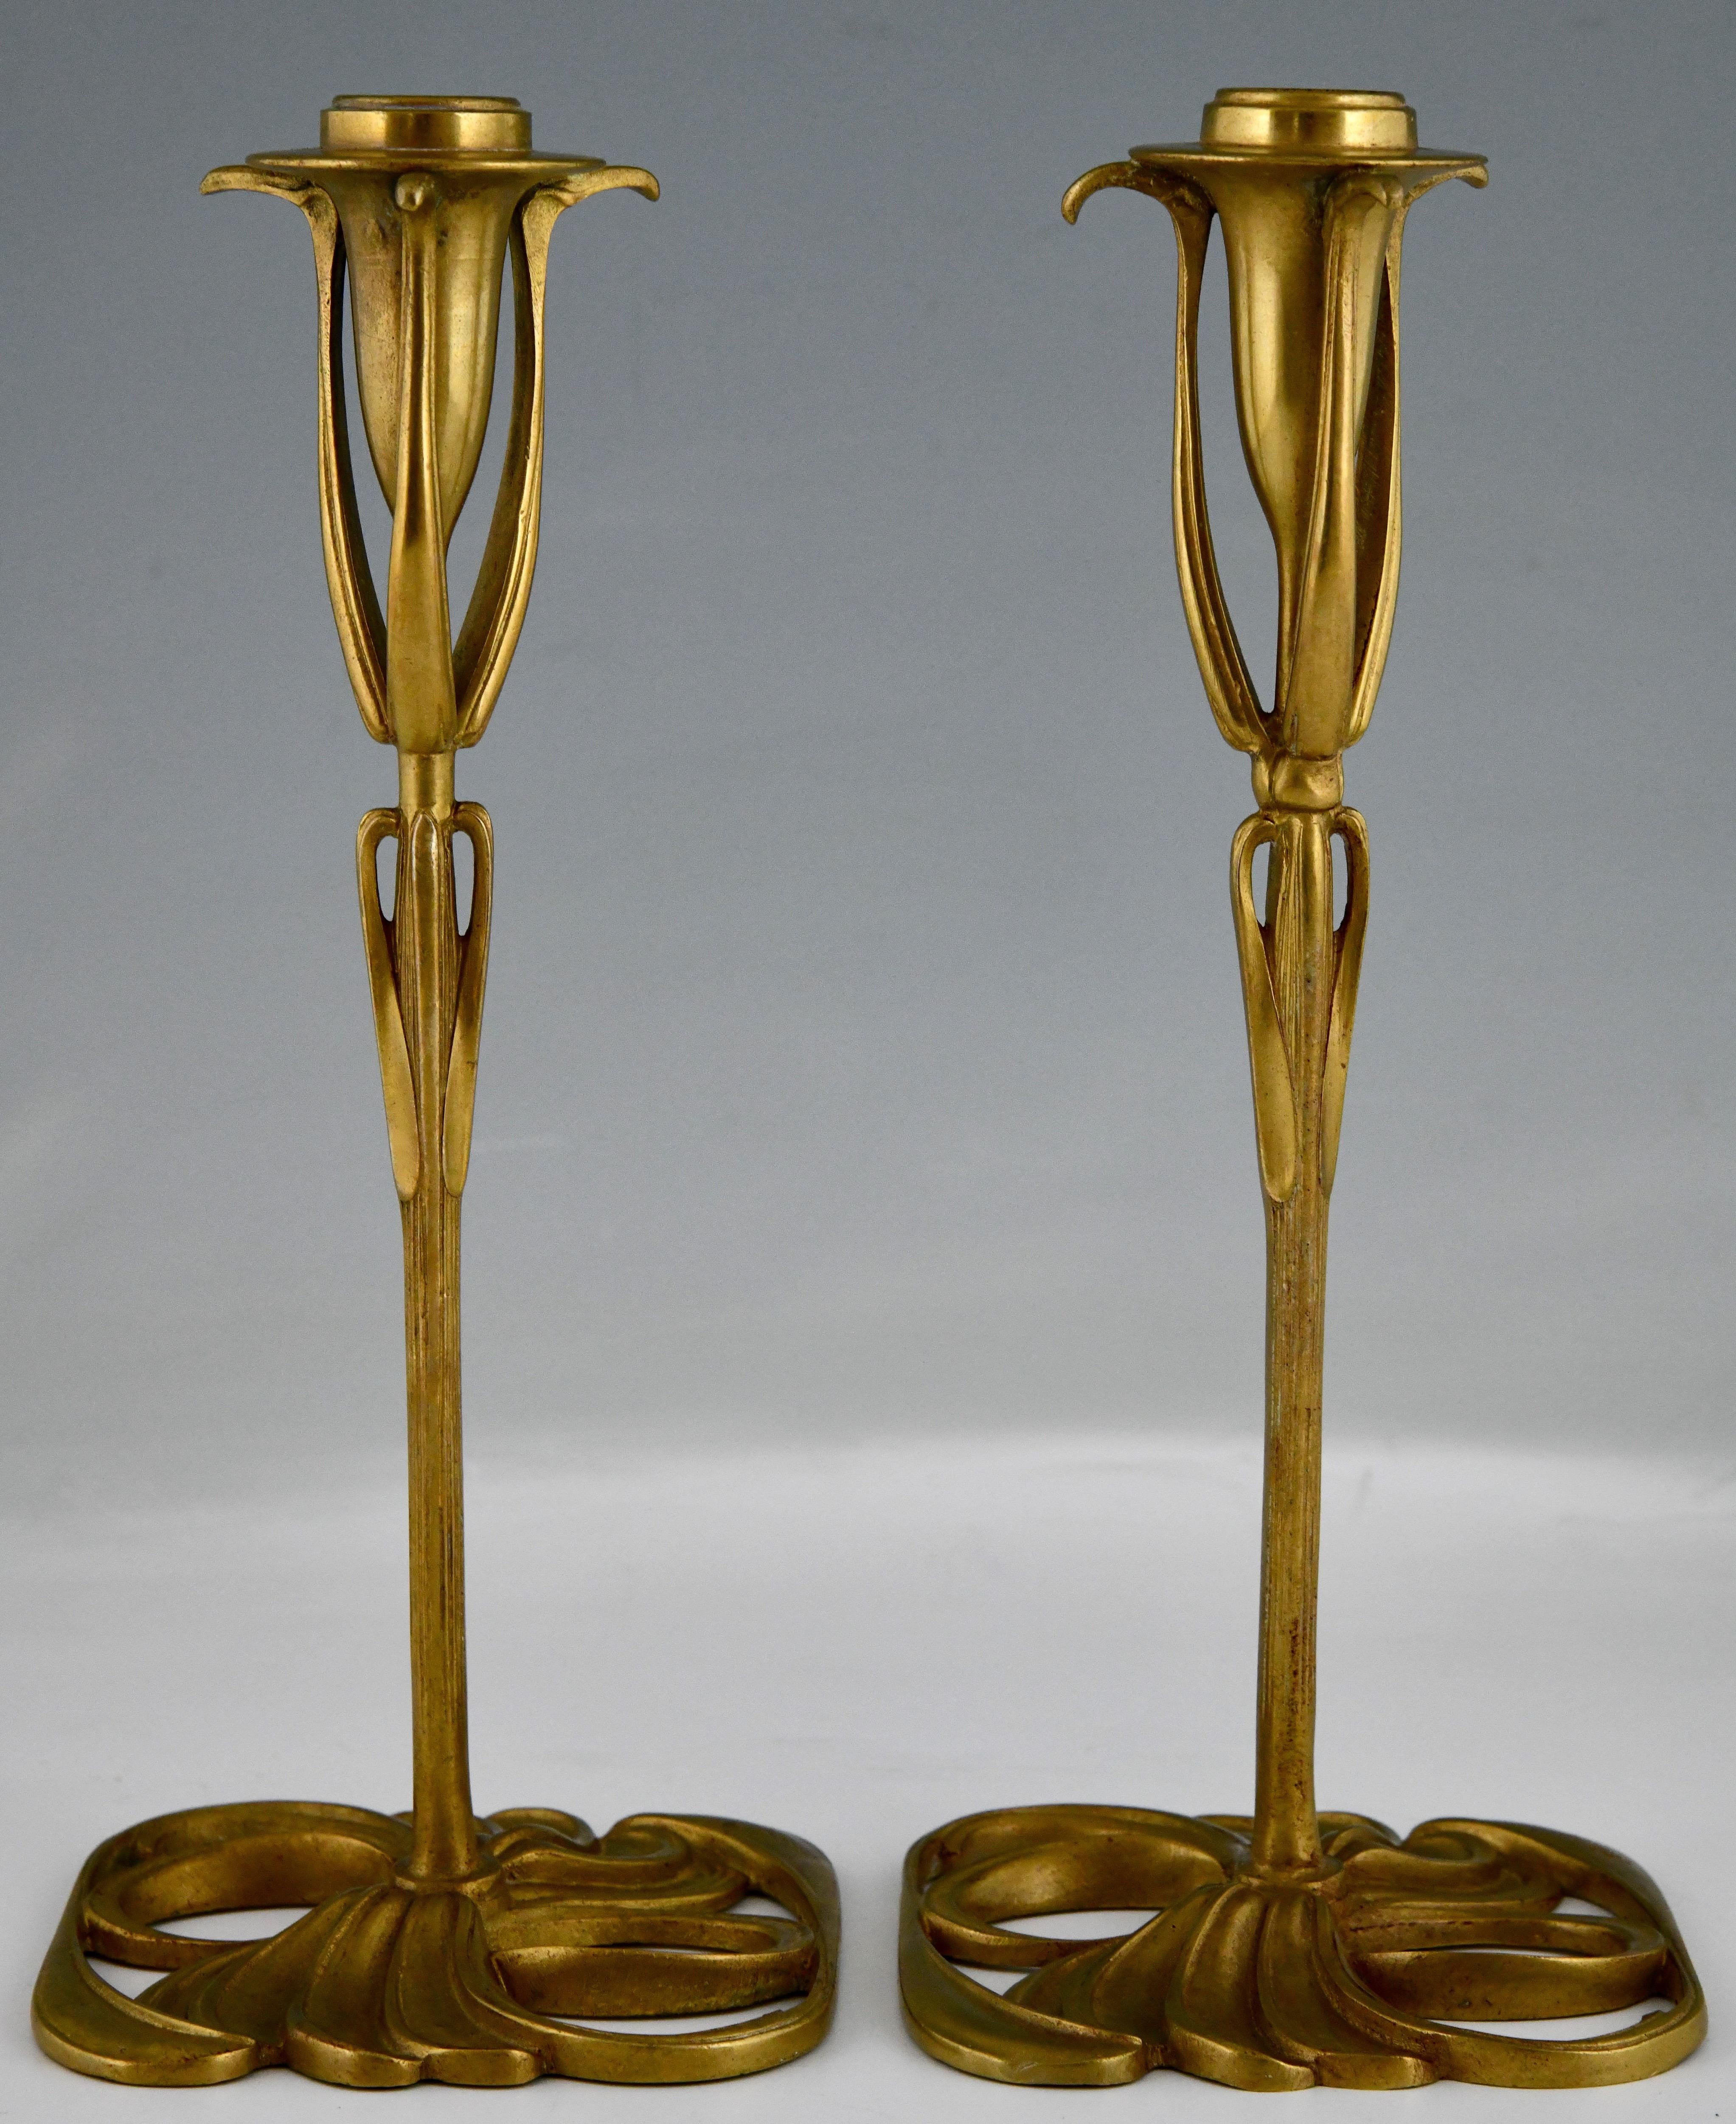 Art Nouveau bronze candlesticks with floral design by Georges de Feure. 
Patinated bronze, France 1900. 
These candlesticks are illustrated in: Lampen und Leuchter, Art Nouveau Art Deco, Wolf Uecker, Schuler. 